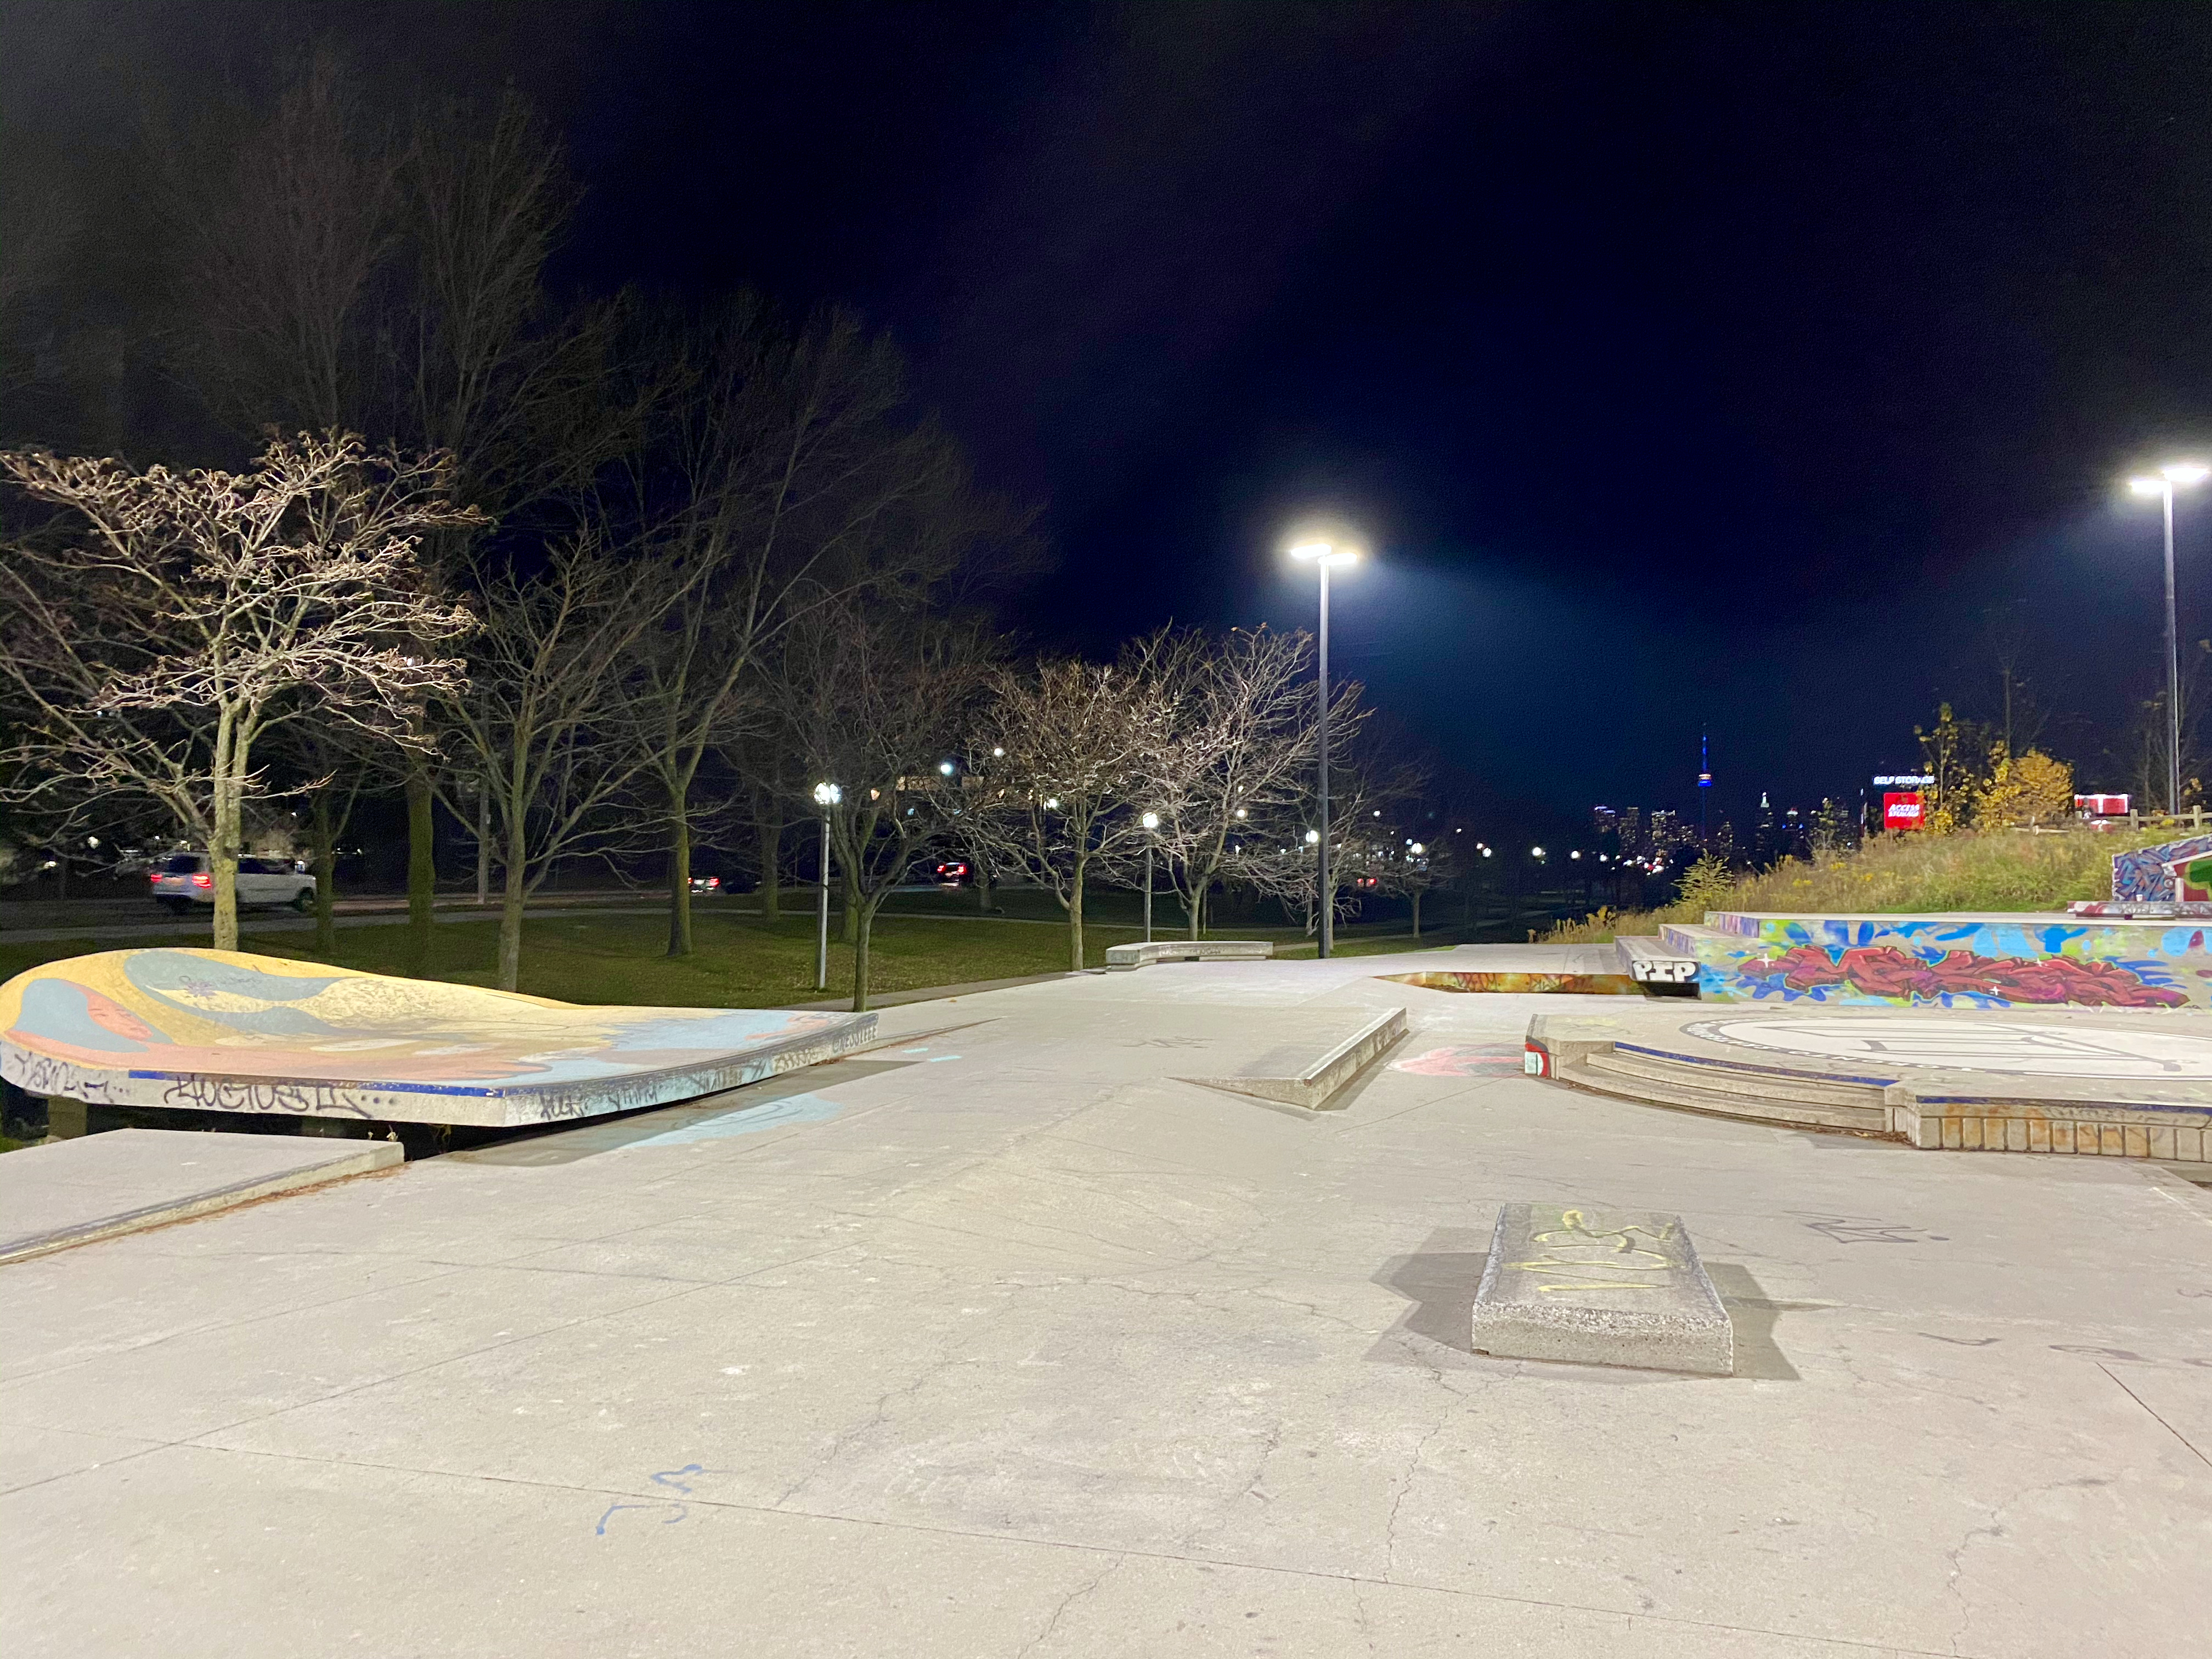 Toronto Beaches skatepark at night